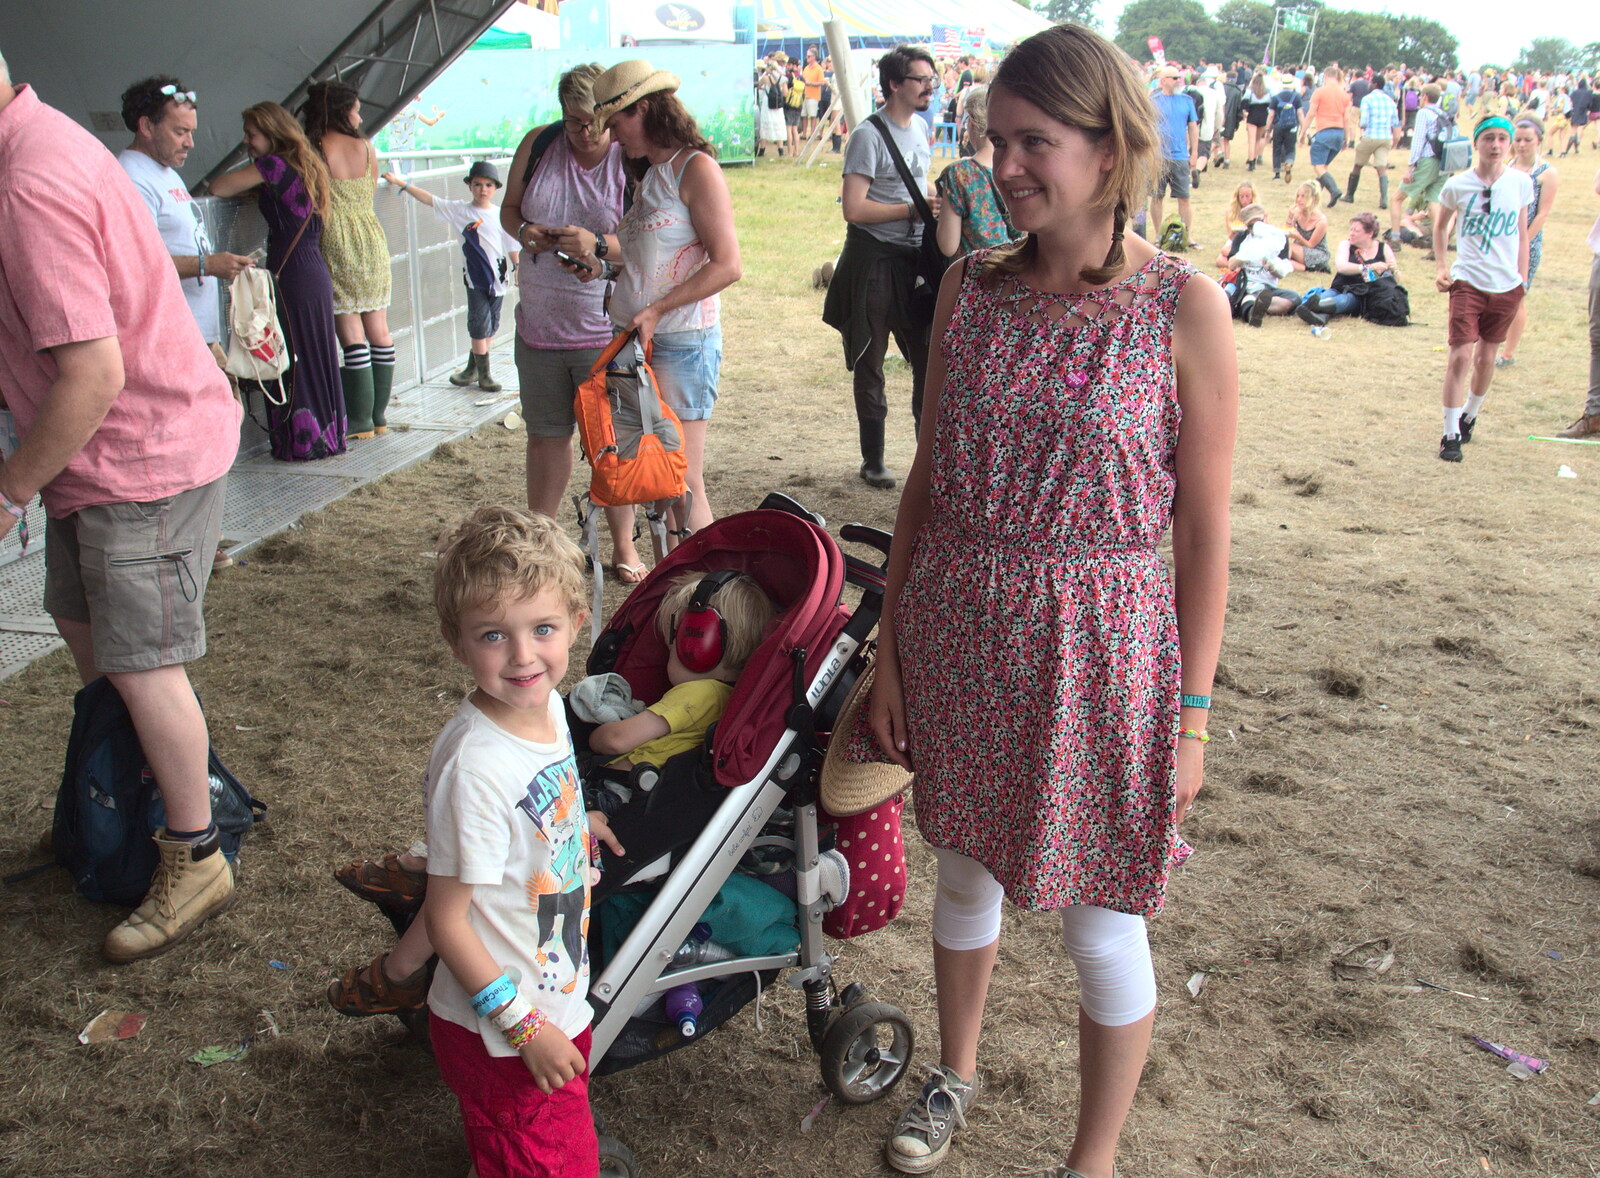 Harry and Isobel from Latitude Festival, Henham Park, Southwold, Suffolk - 17th July 2014